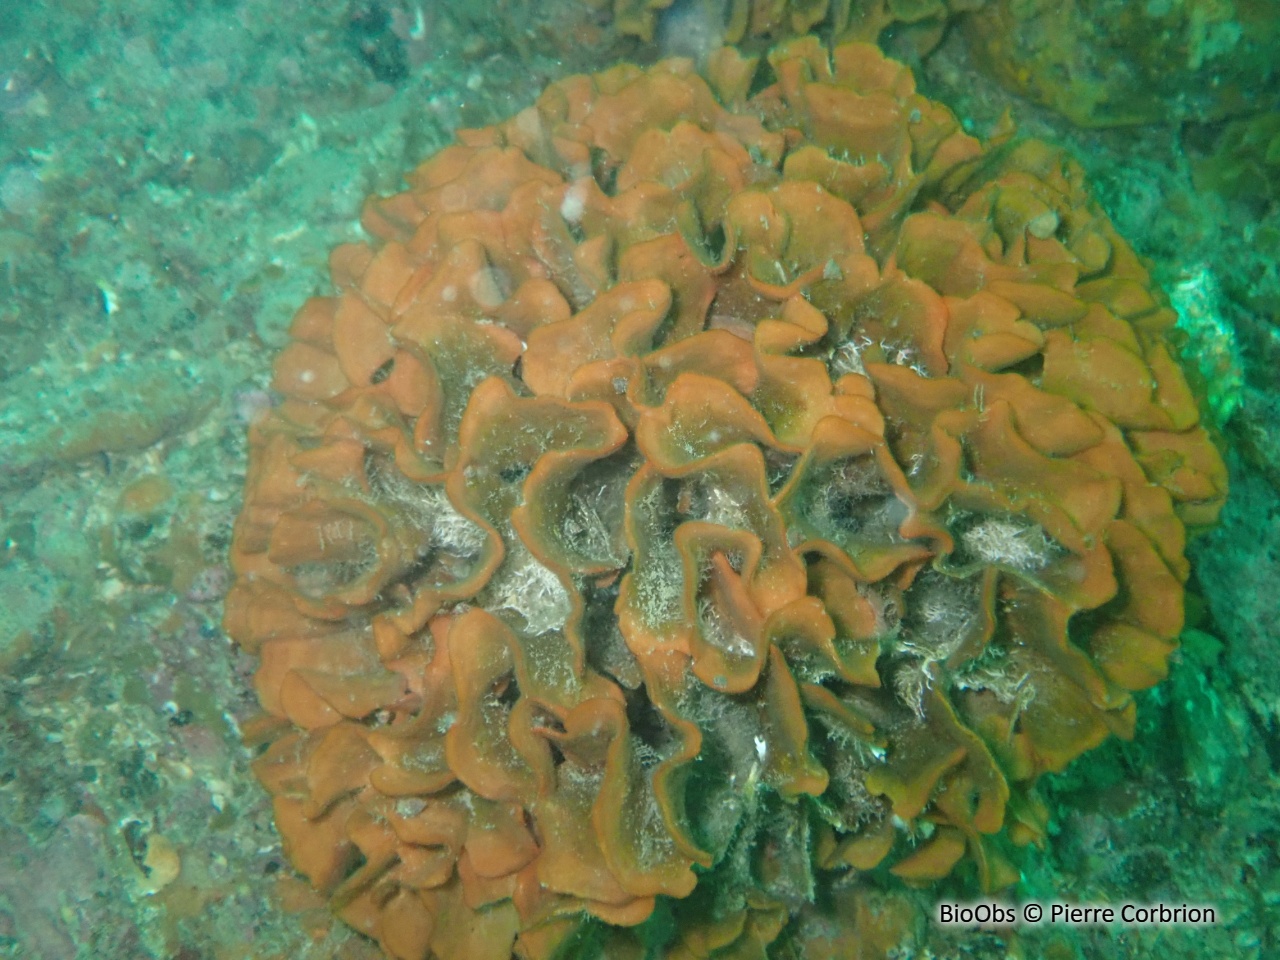 Rose de mer atlantique - Pentapora foliacea - Pierre Corbrion - BioObs